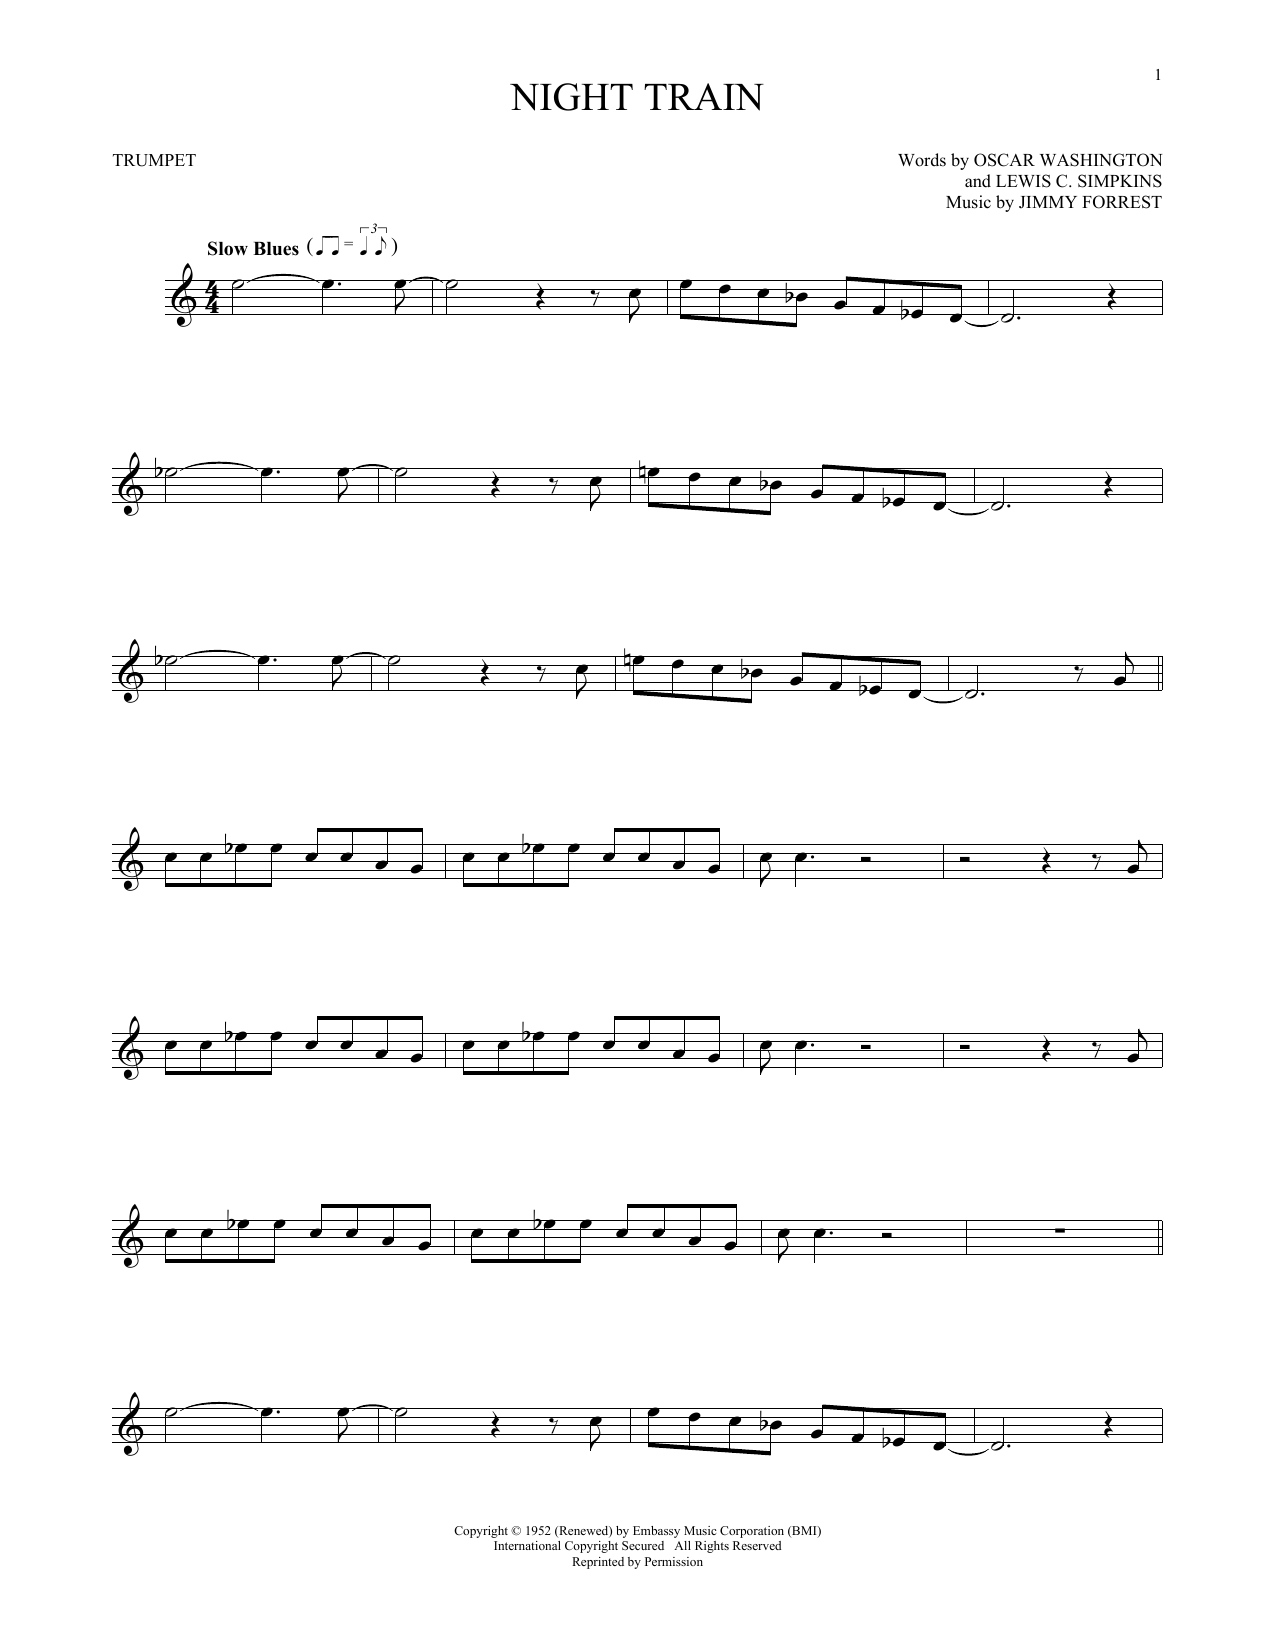 Oscar Washington Night Train Sheet Music Notes & Chords for Trumpet - Download or Print PDF